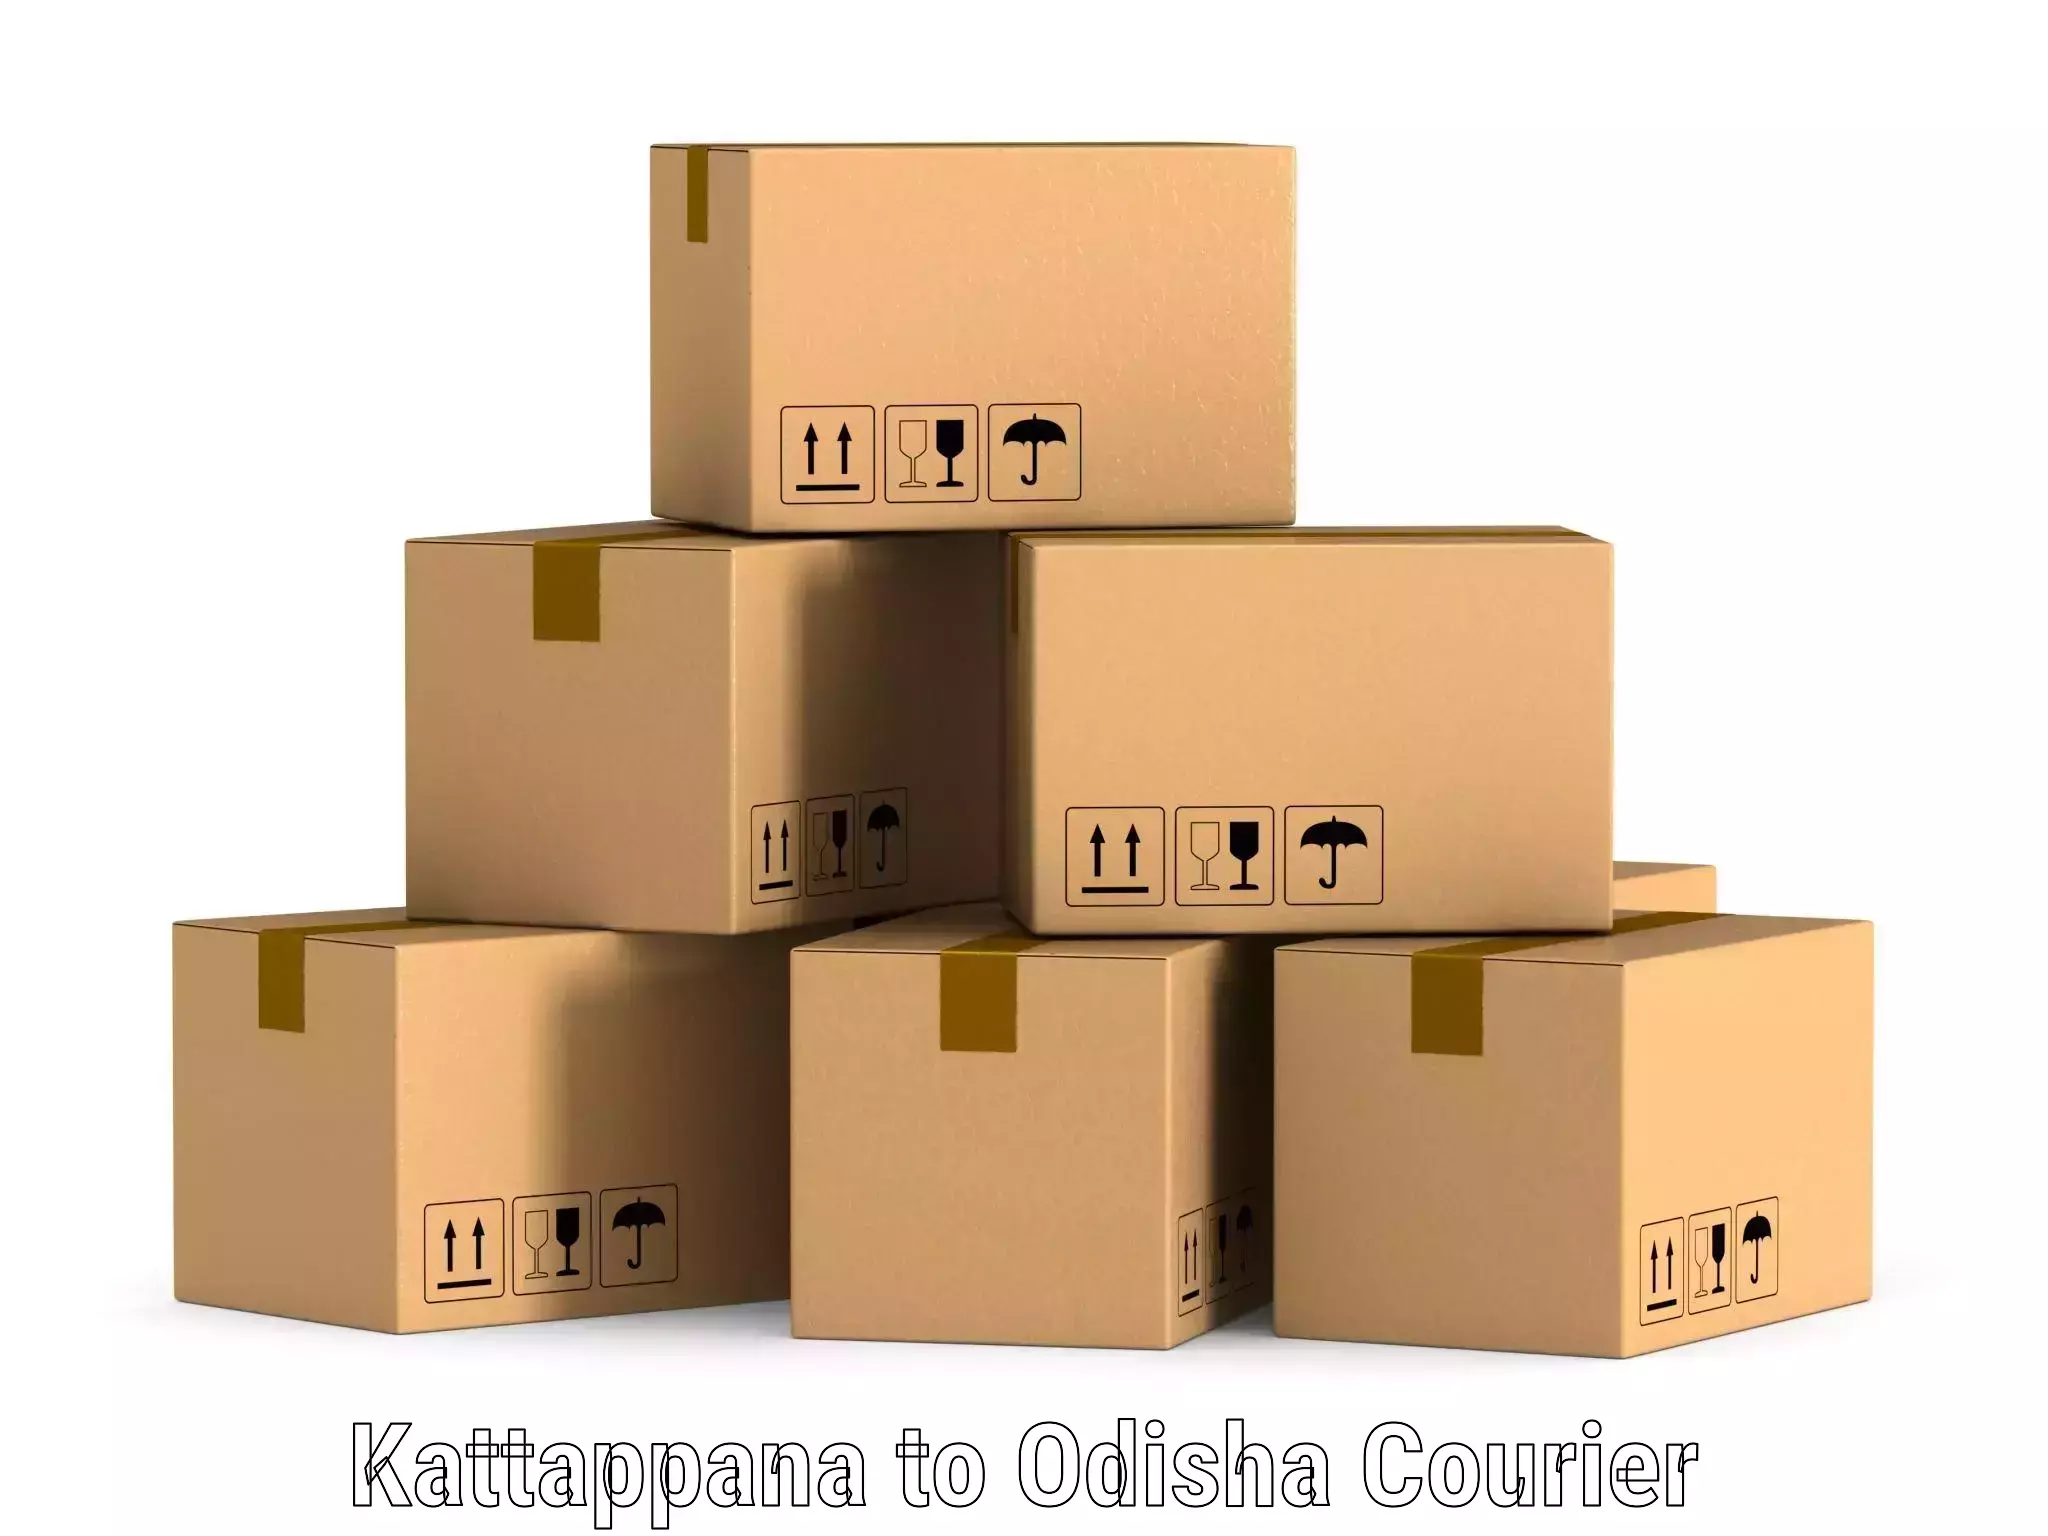 Courier service comparison Kattappana to Odisha